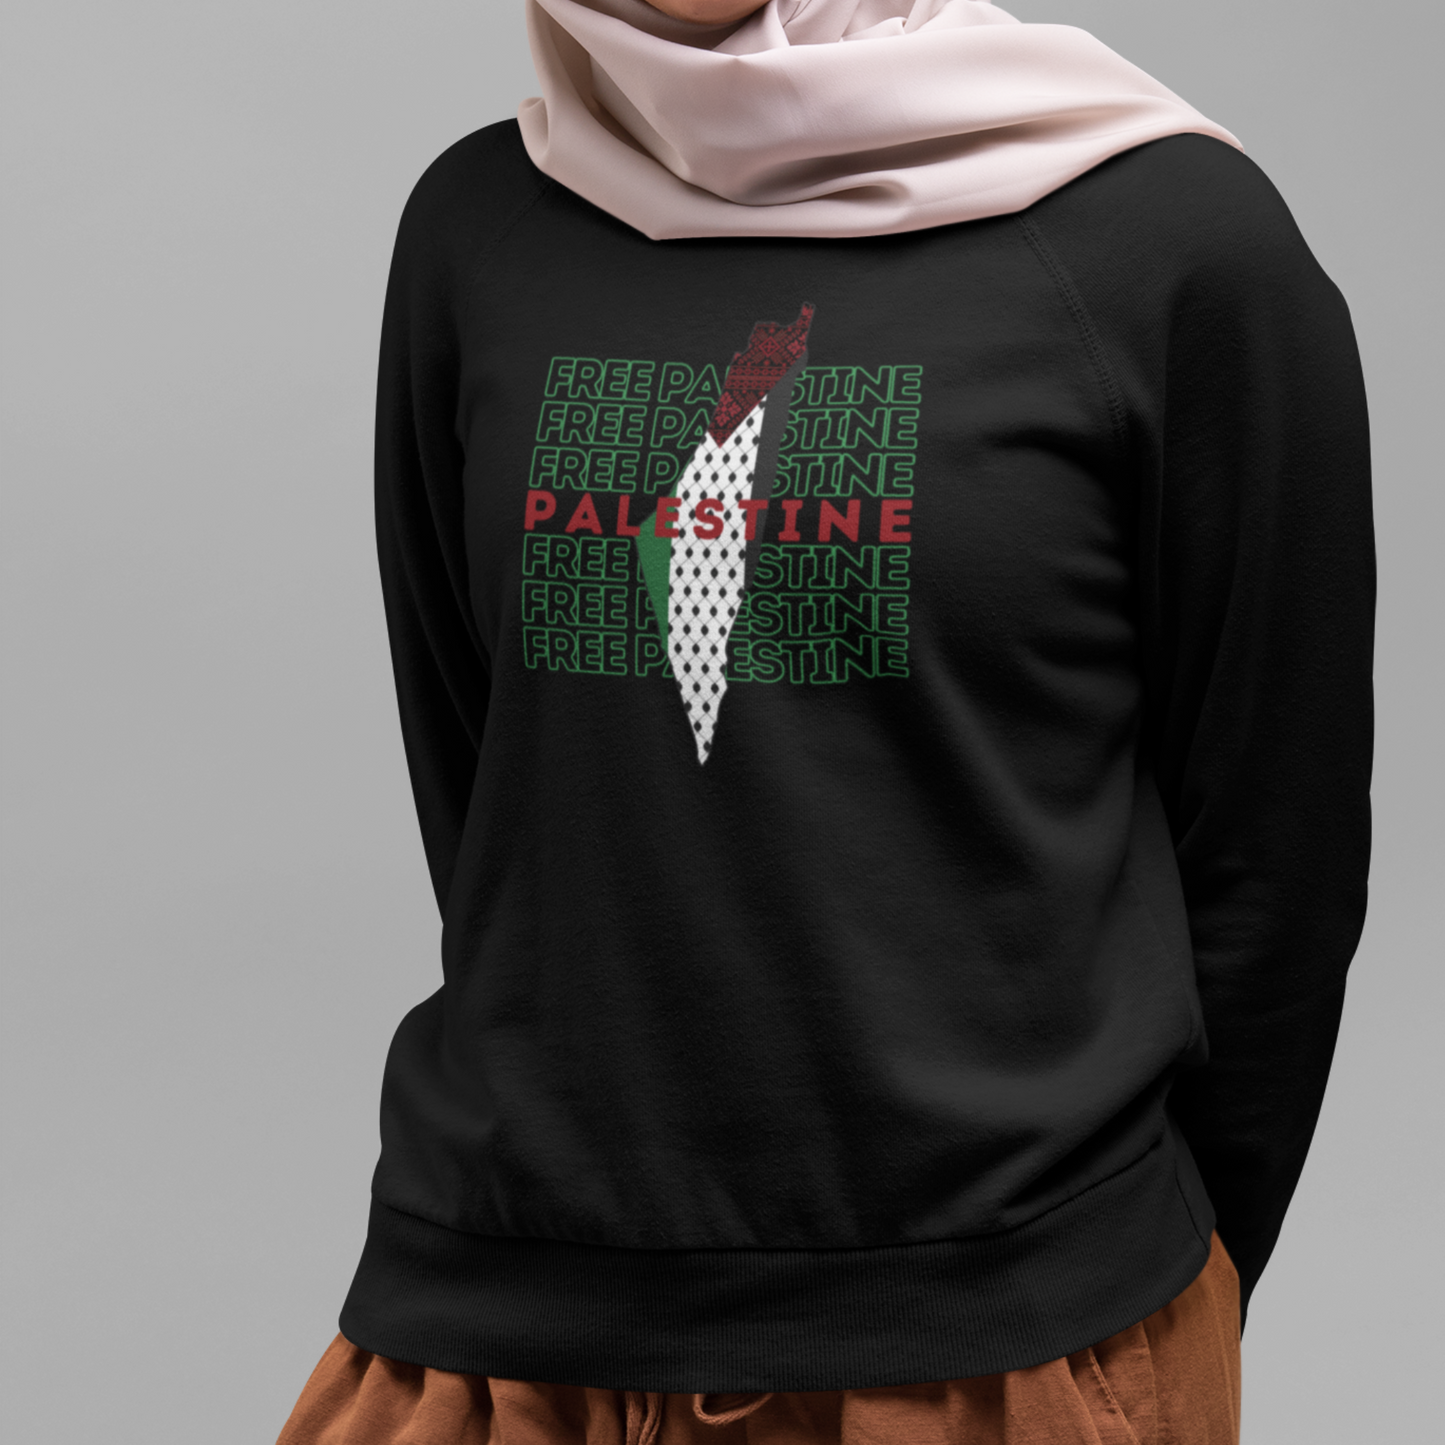 Free Palestine Green Map Sweatshirt